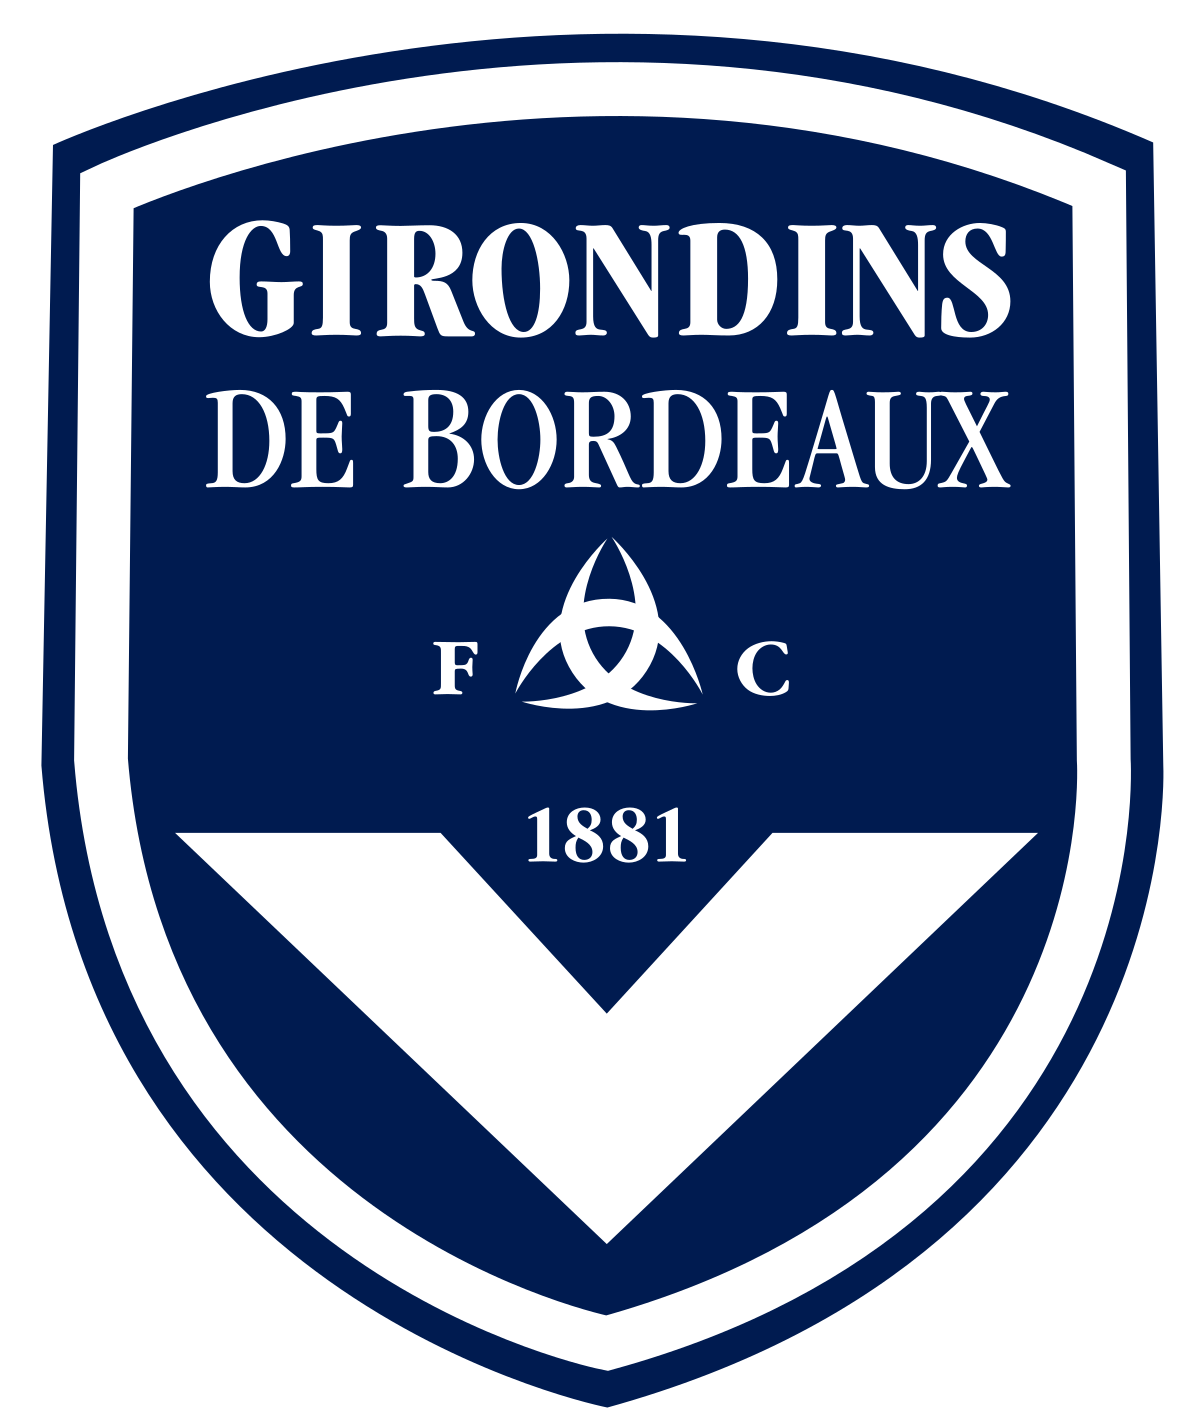 Girondins de Bourdeaux